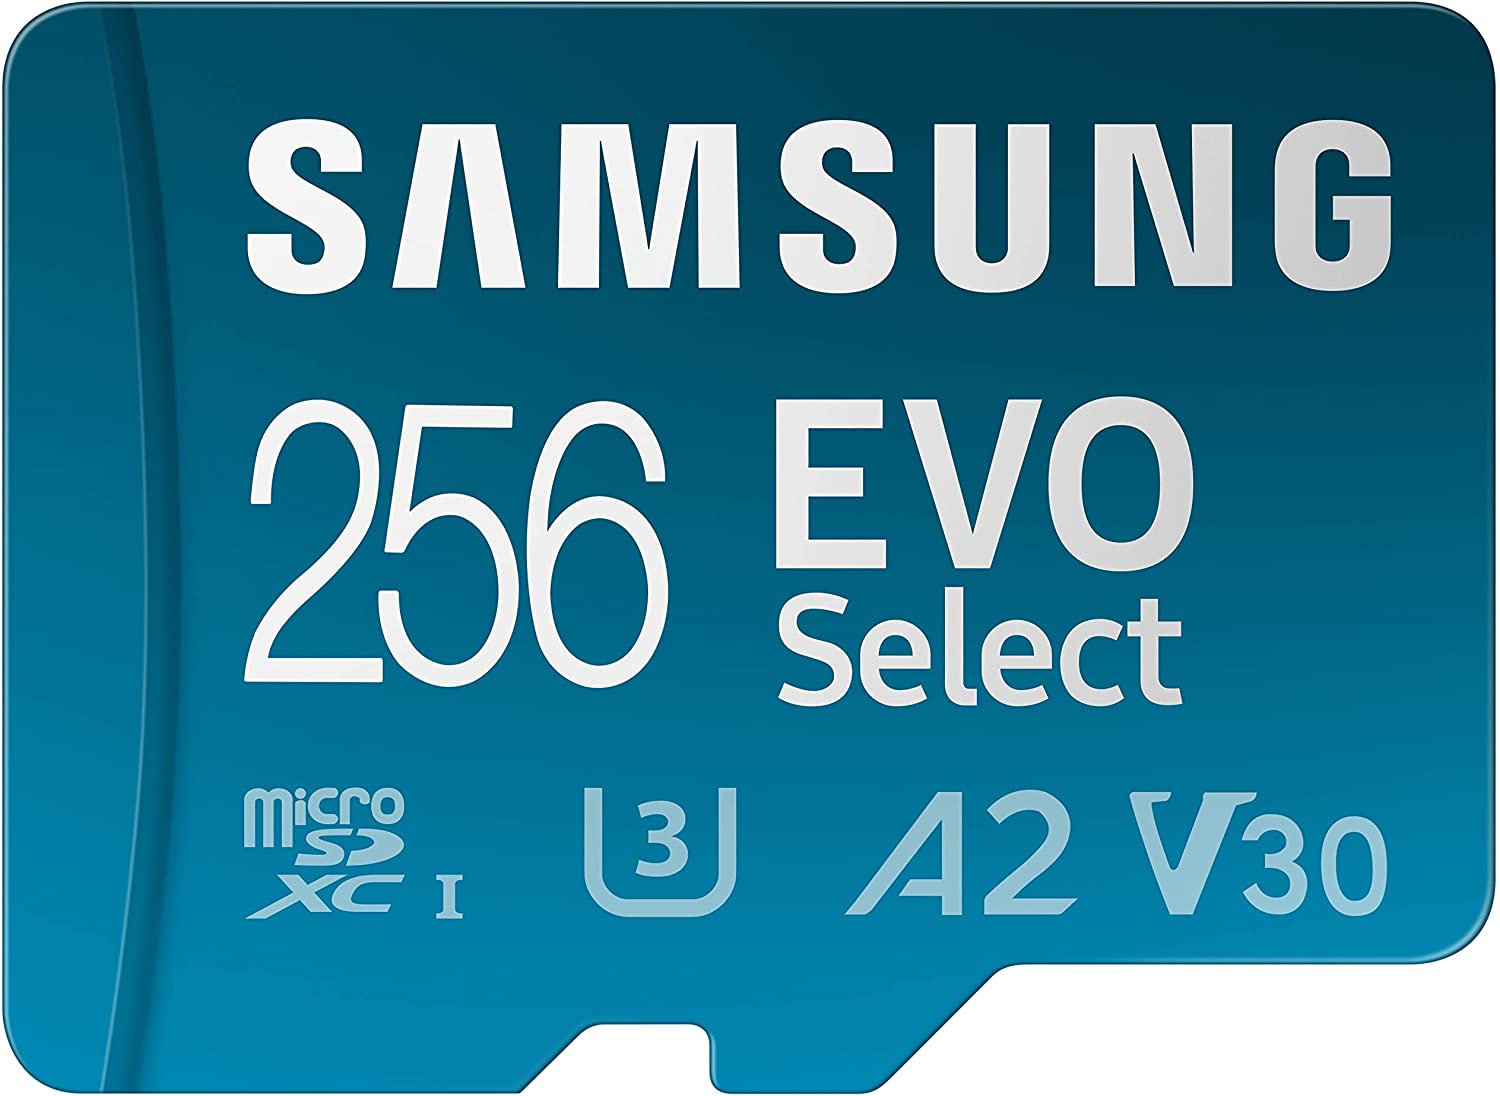 SAMSUNG - Carte microSDXC Evo Plus 512 GB SAMSUNG